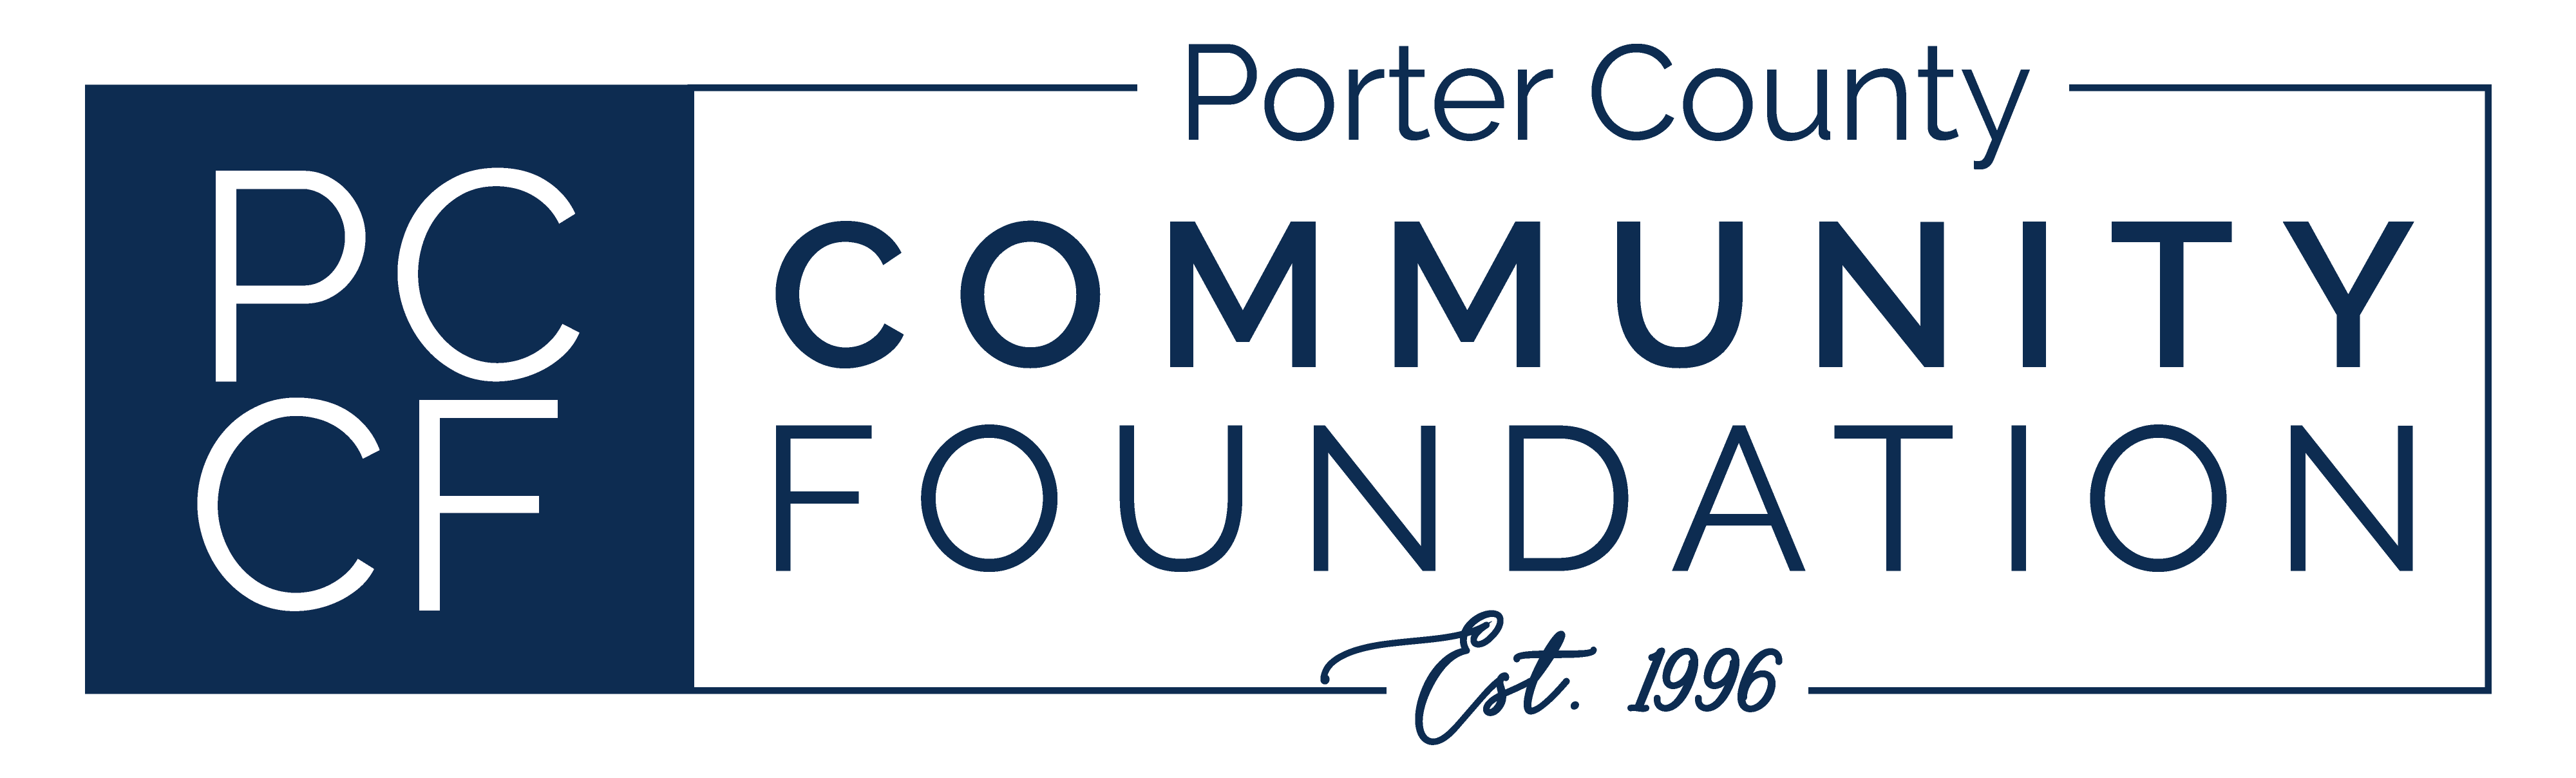 porter-county-community-foundation-login-screen